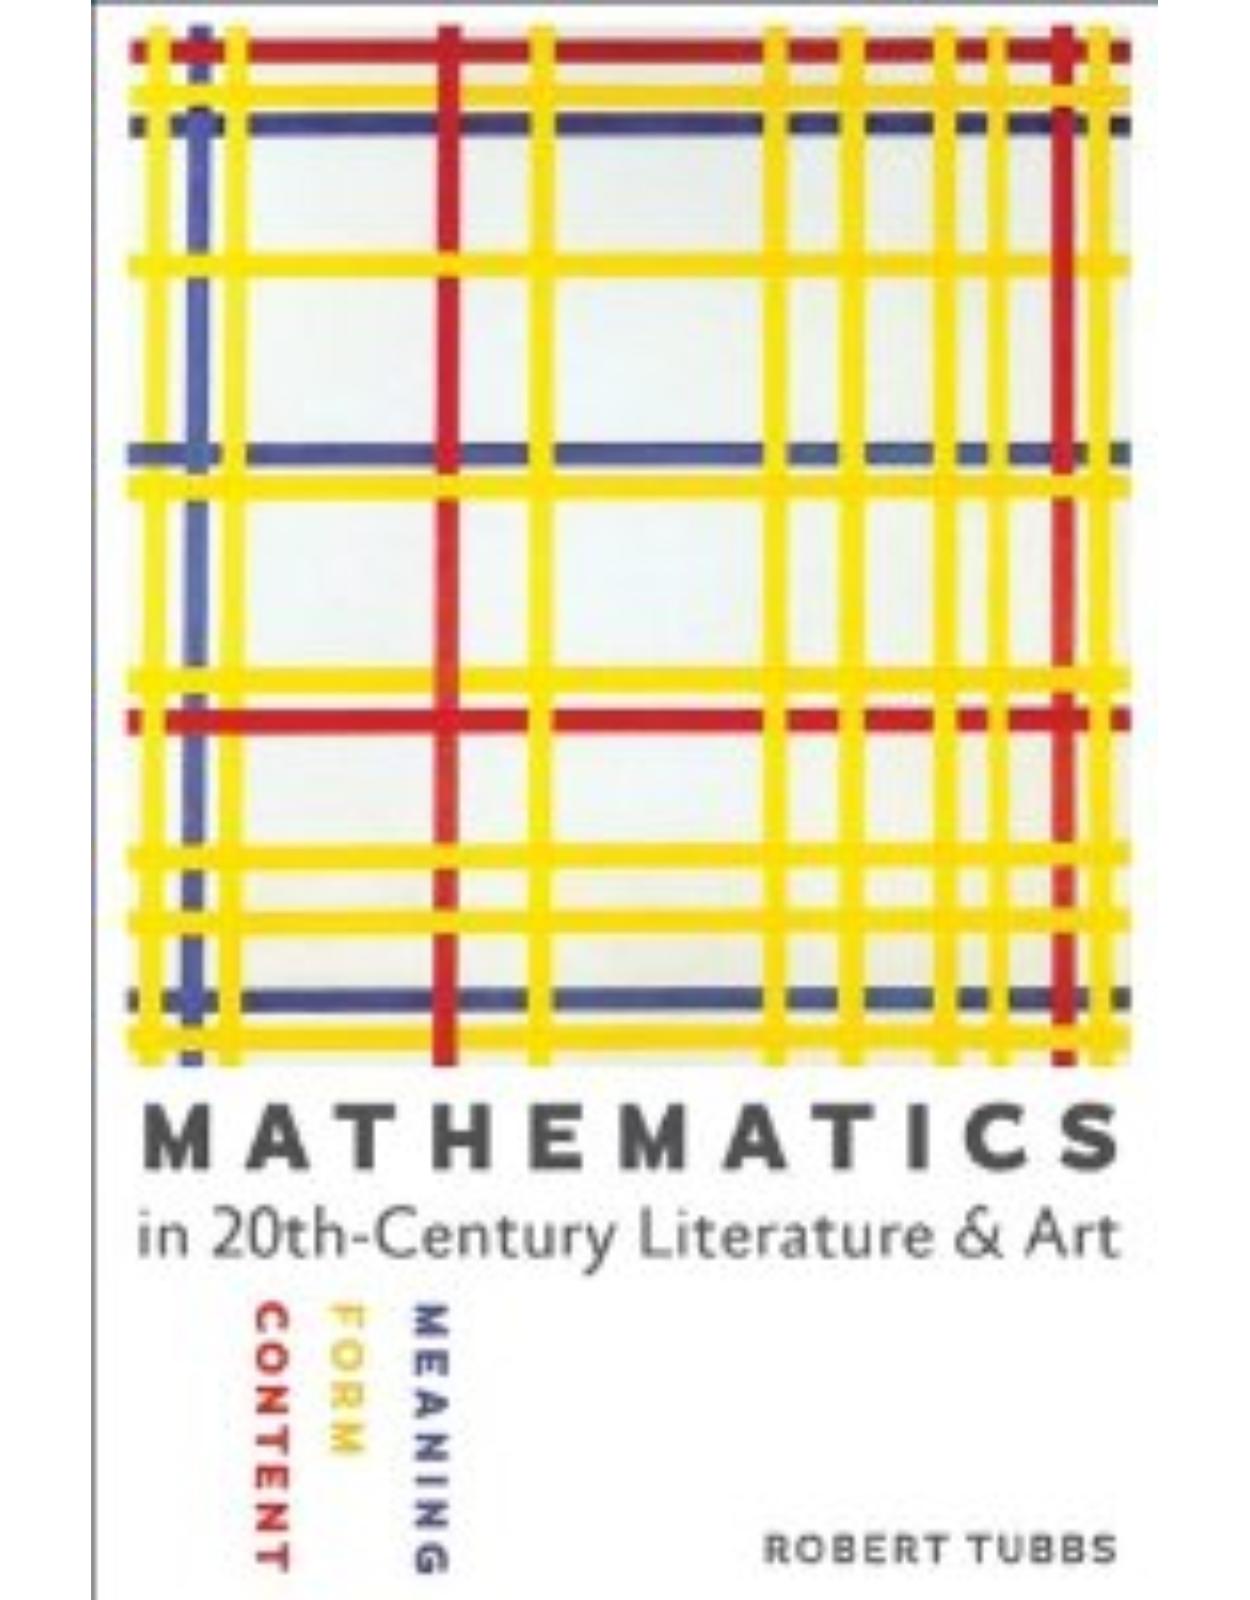 Mathematics in Twentieth-Century Literature and Art, Content, Form, Meaning